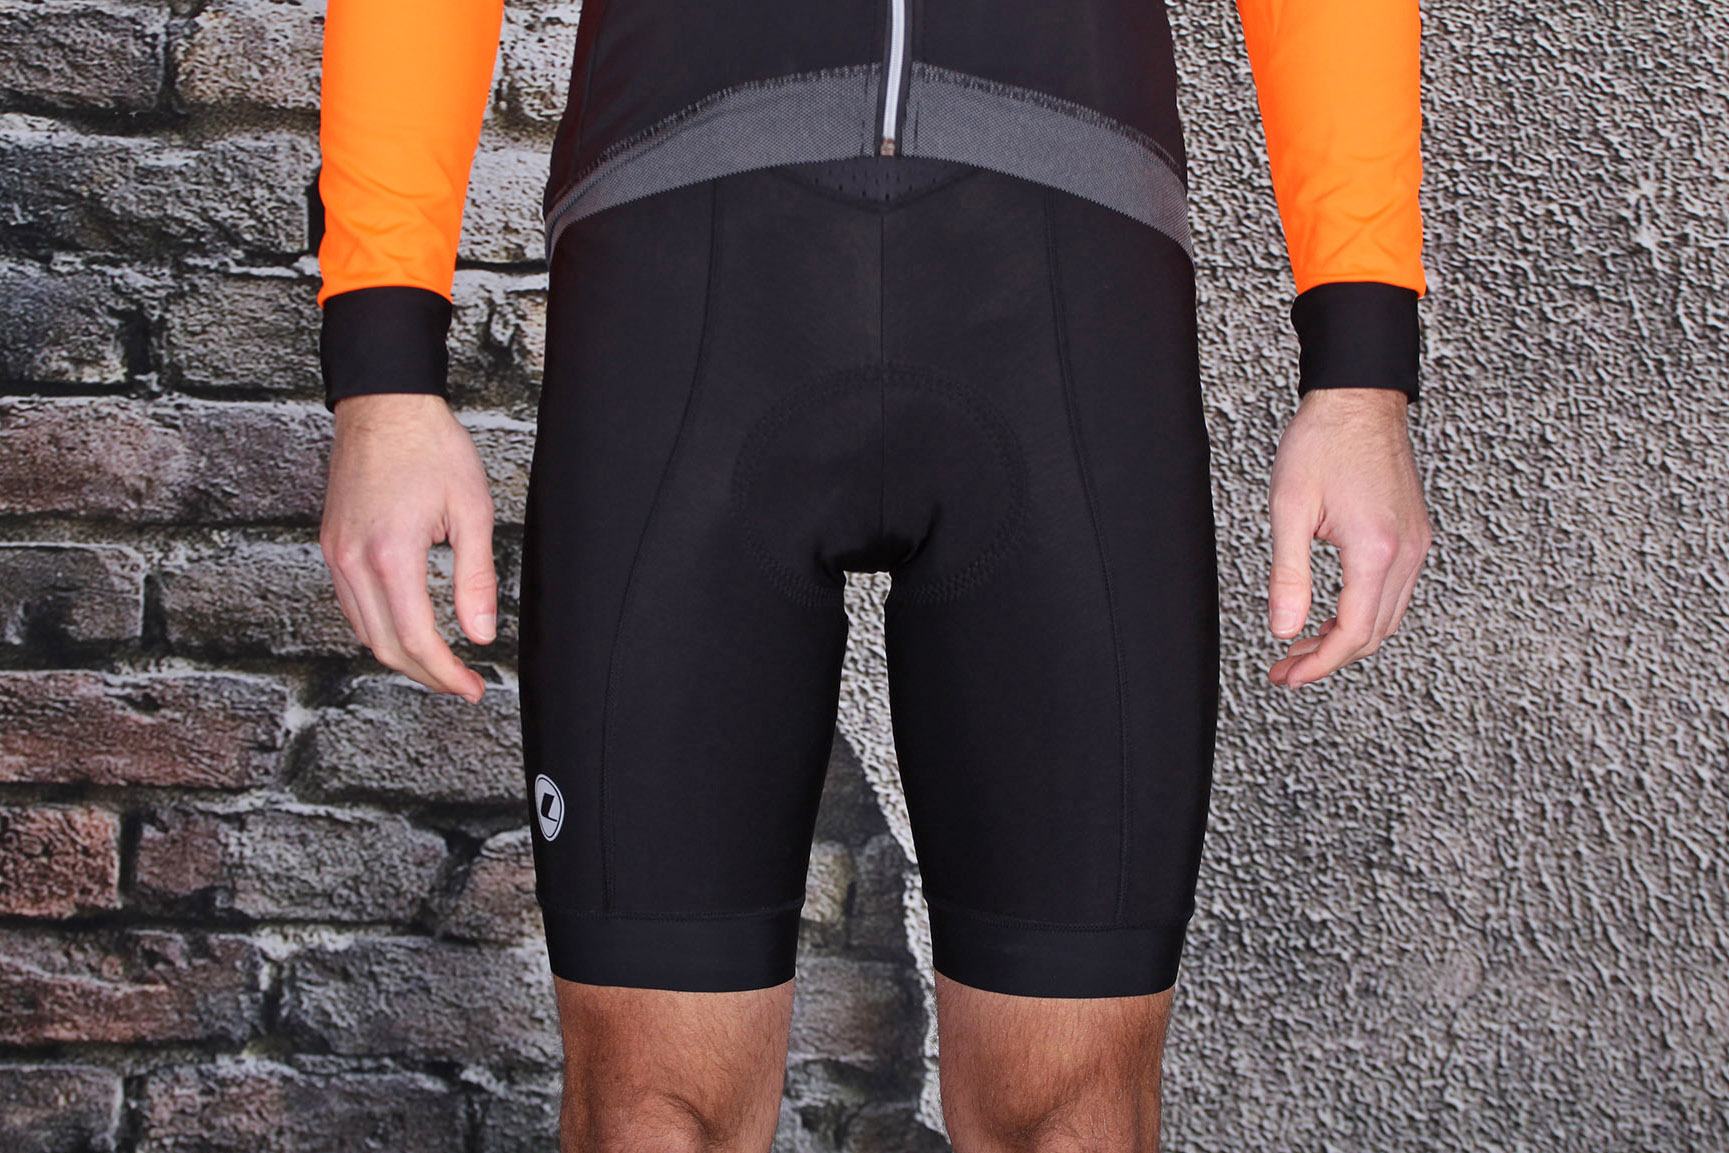 lusso carbon bib shorts v2